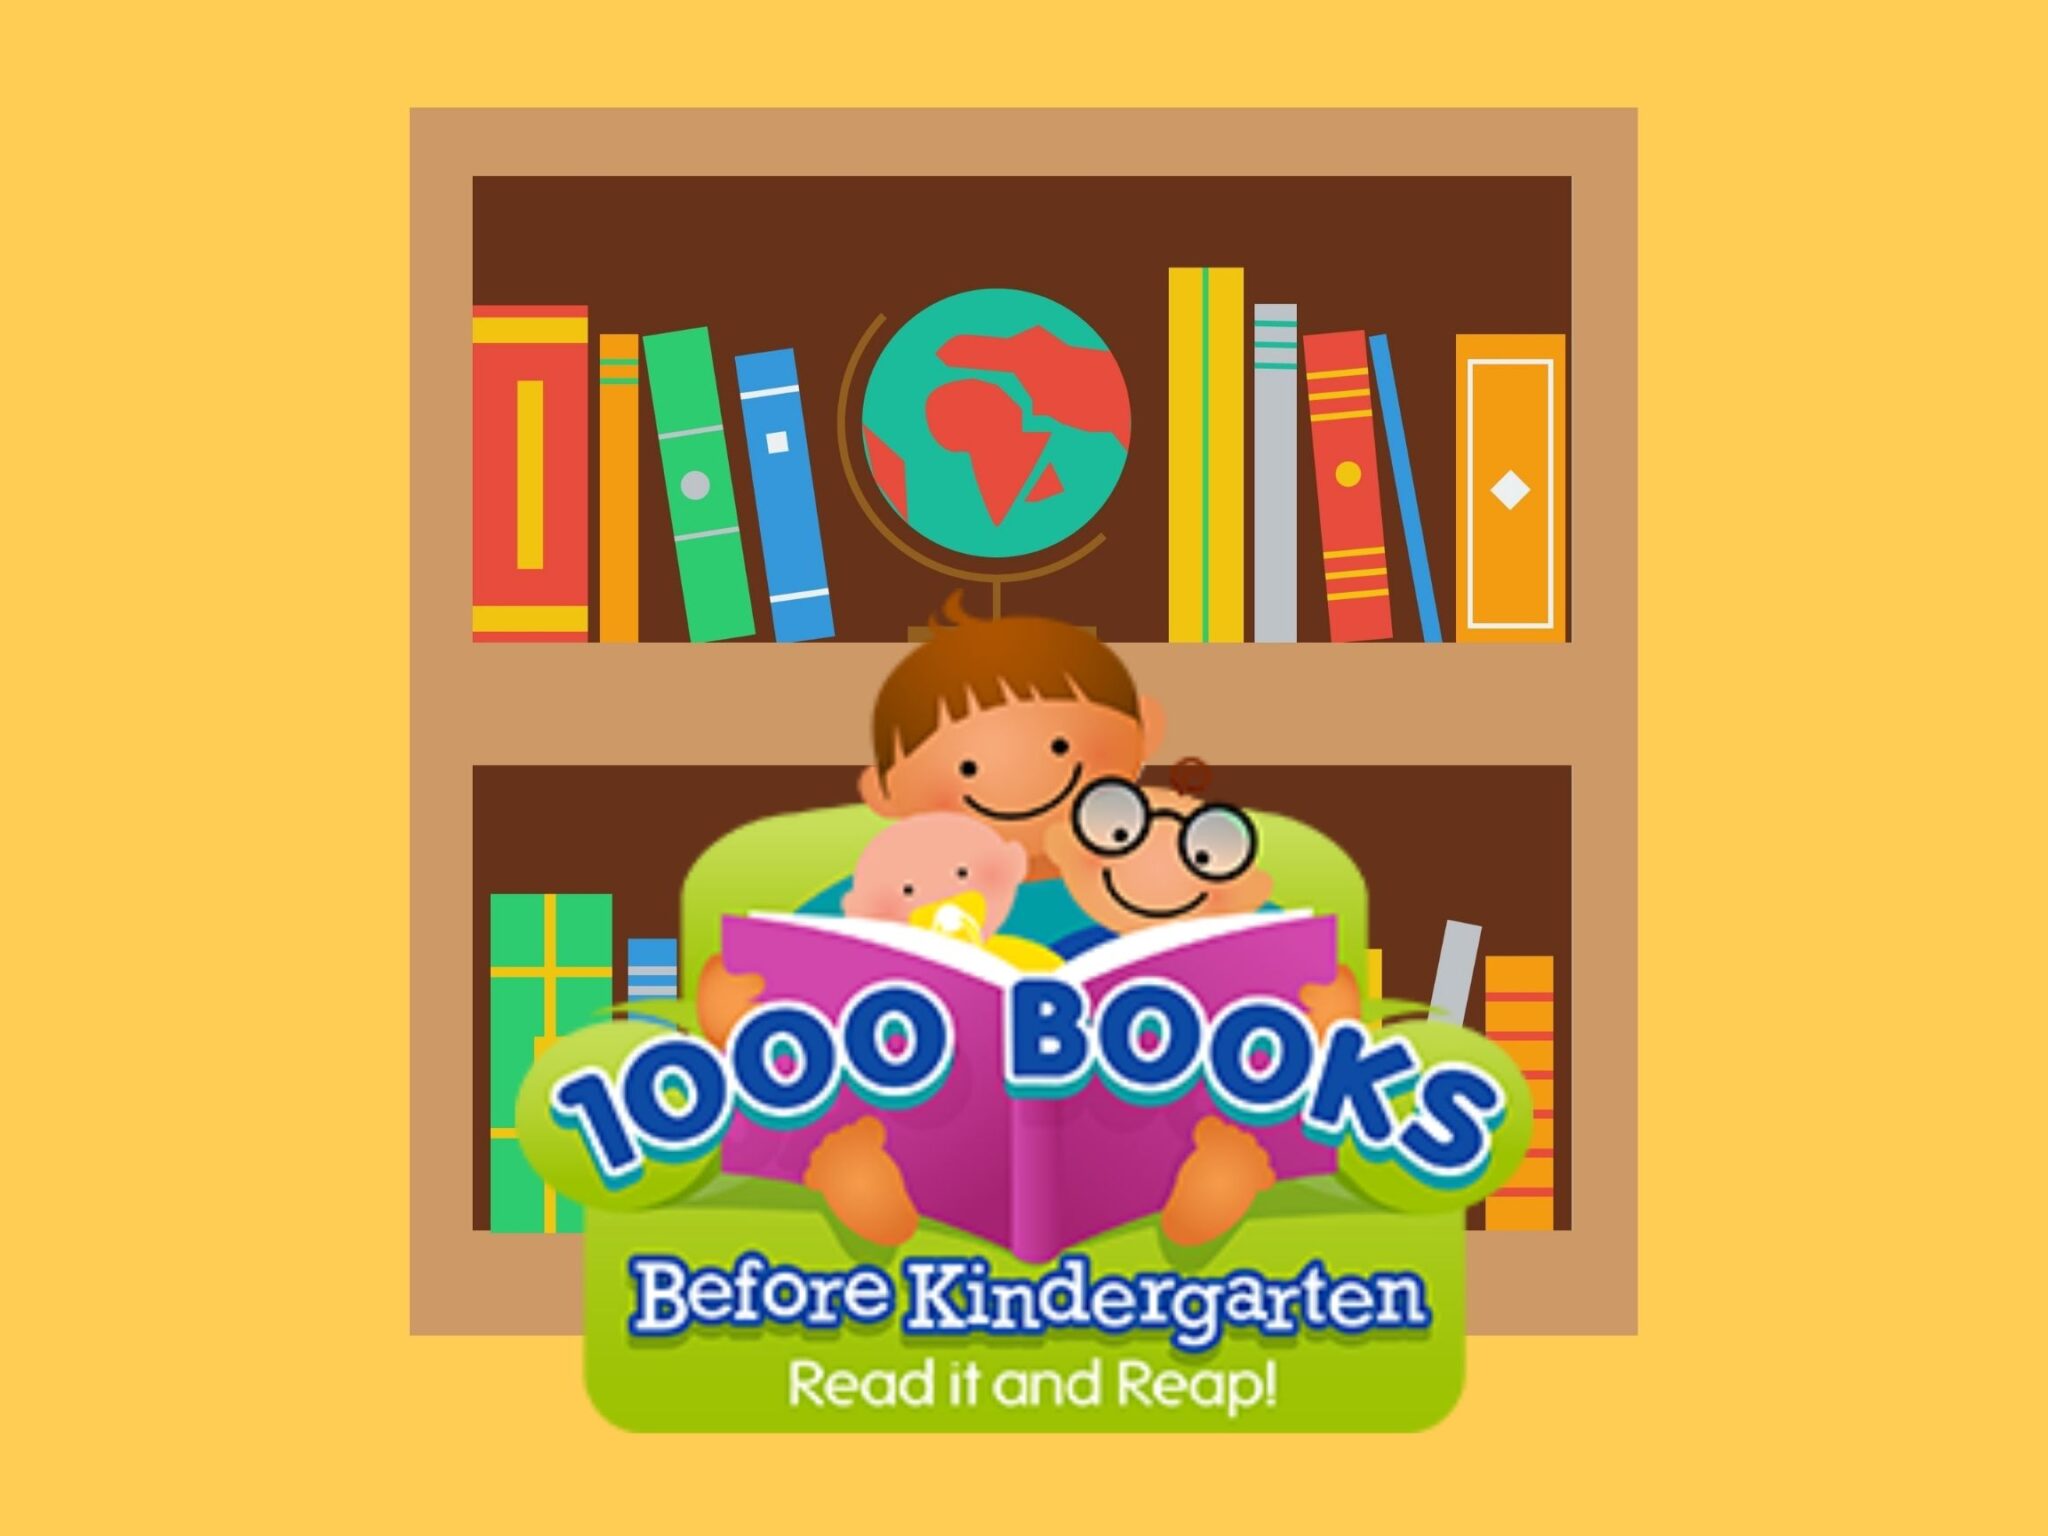 1000 books